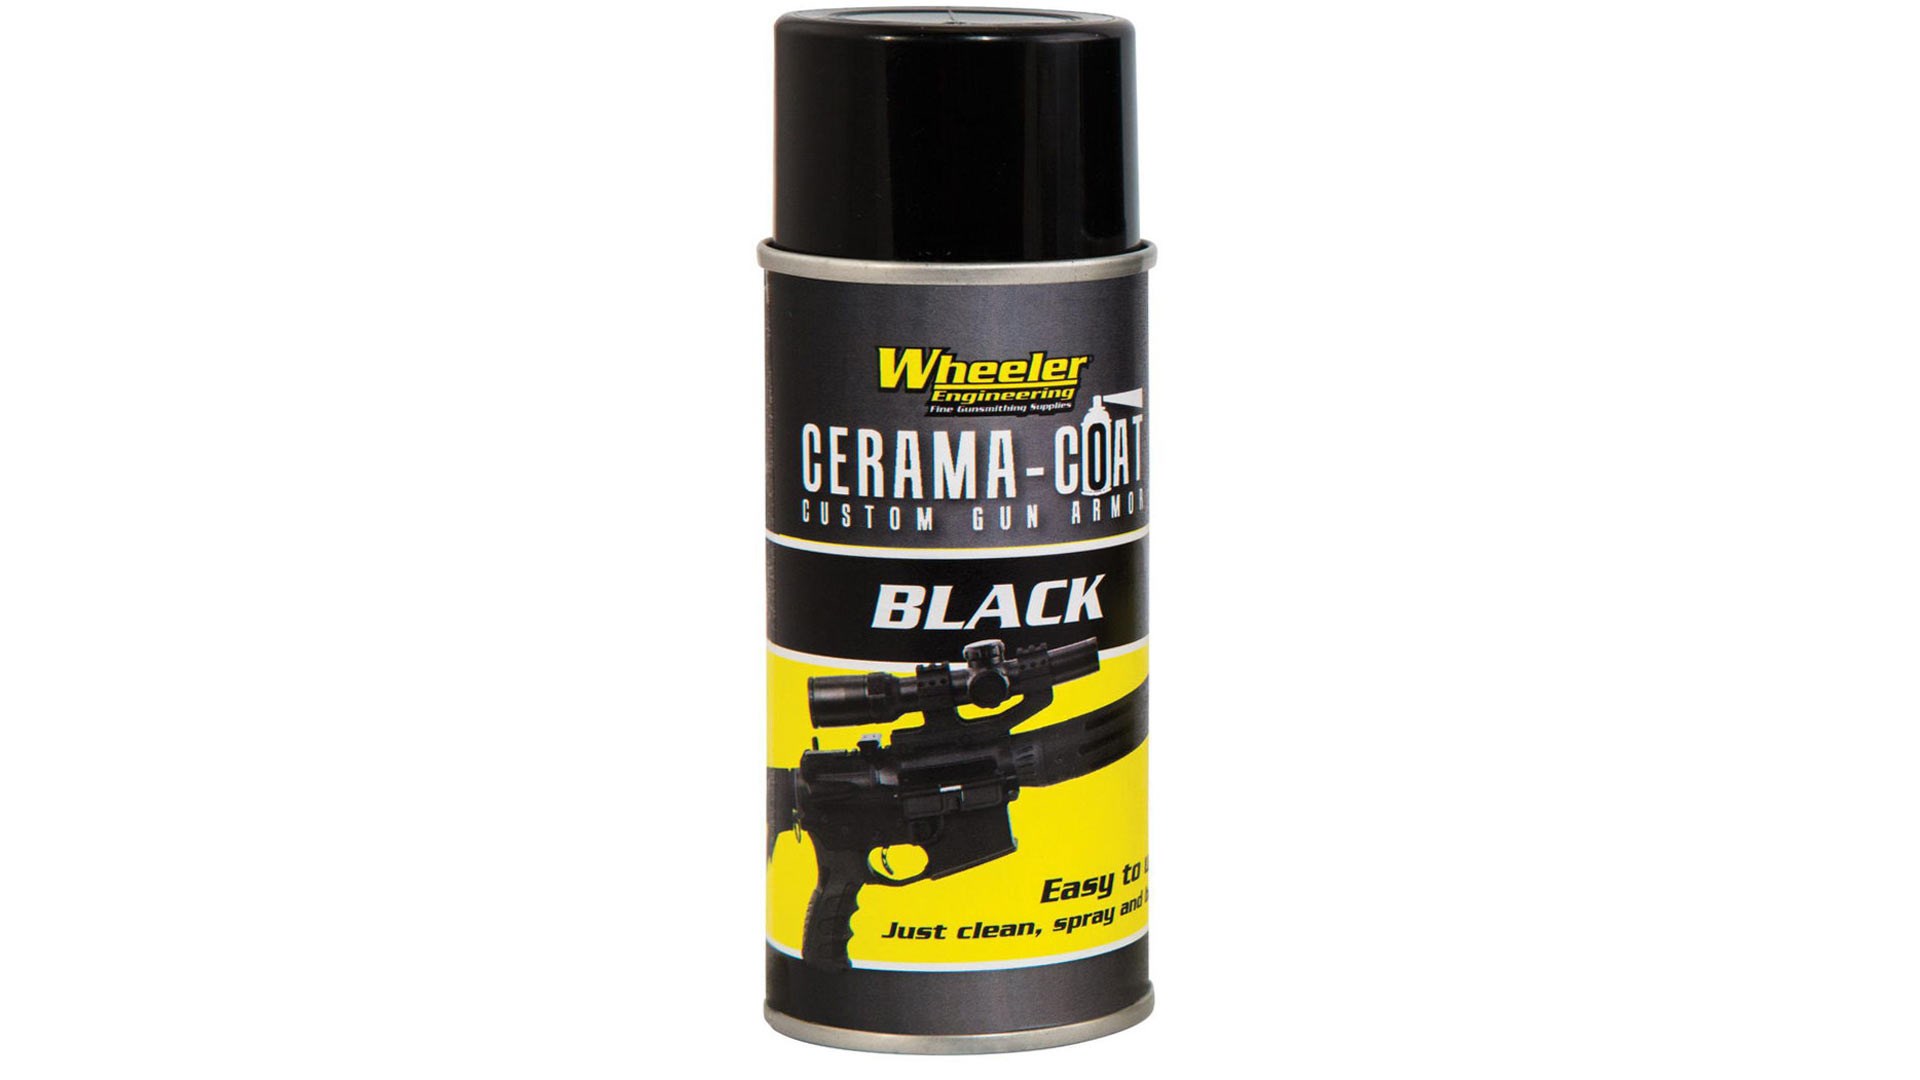 spray can black cerama-coat finish for guns from wheeler engineering